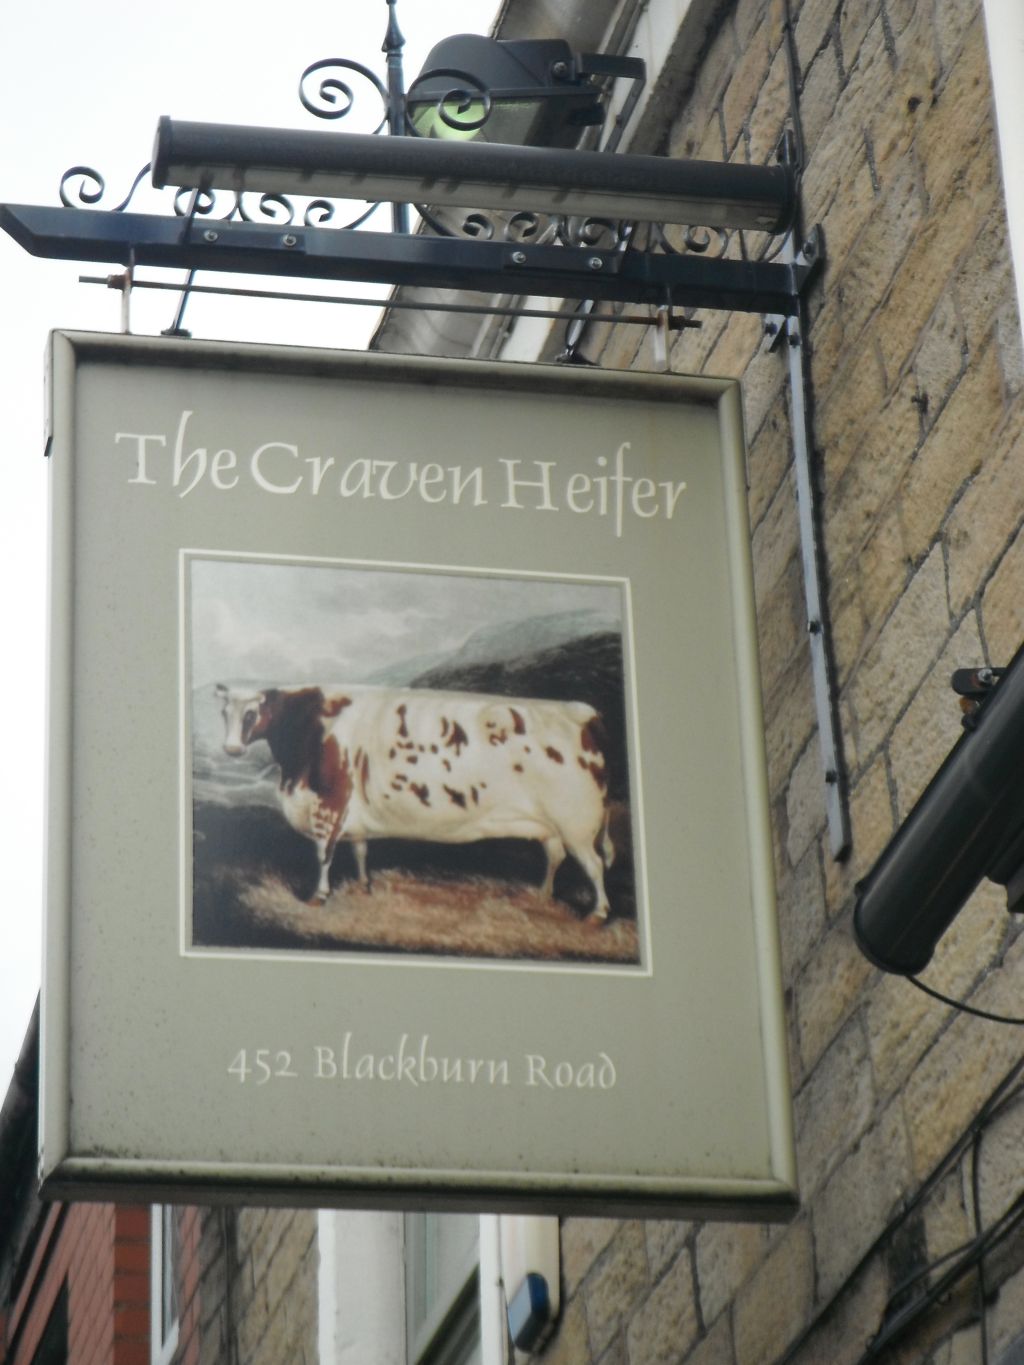 Photo taken by me - The Craven Heifer pub sign, Halliwell Bolton Lancashire